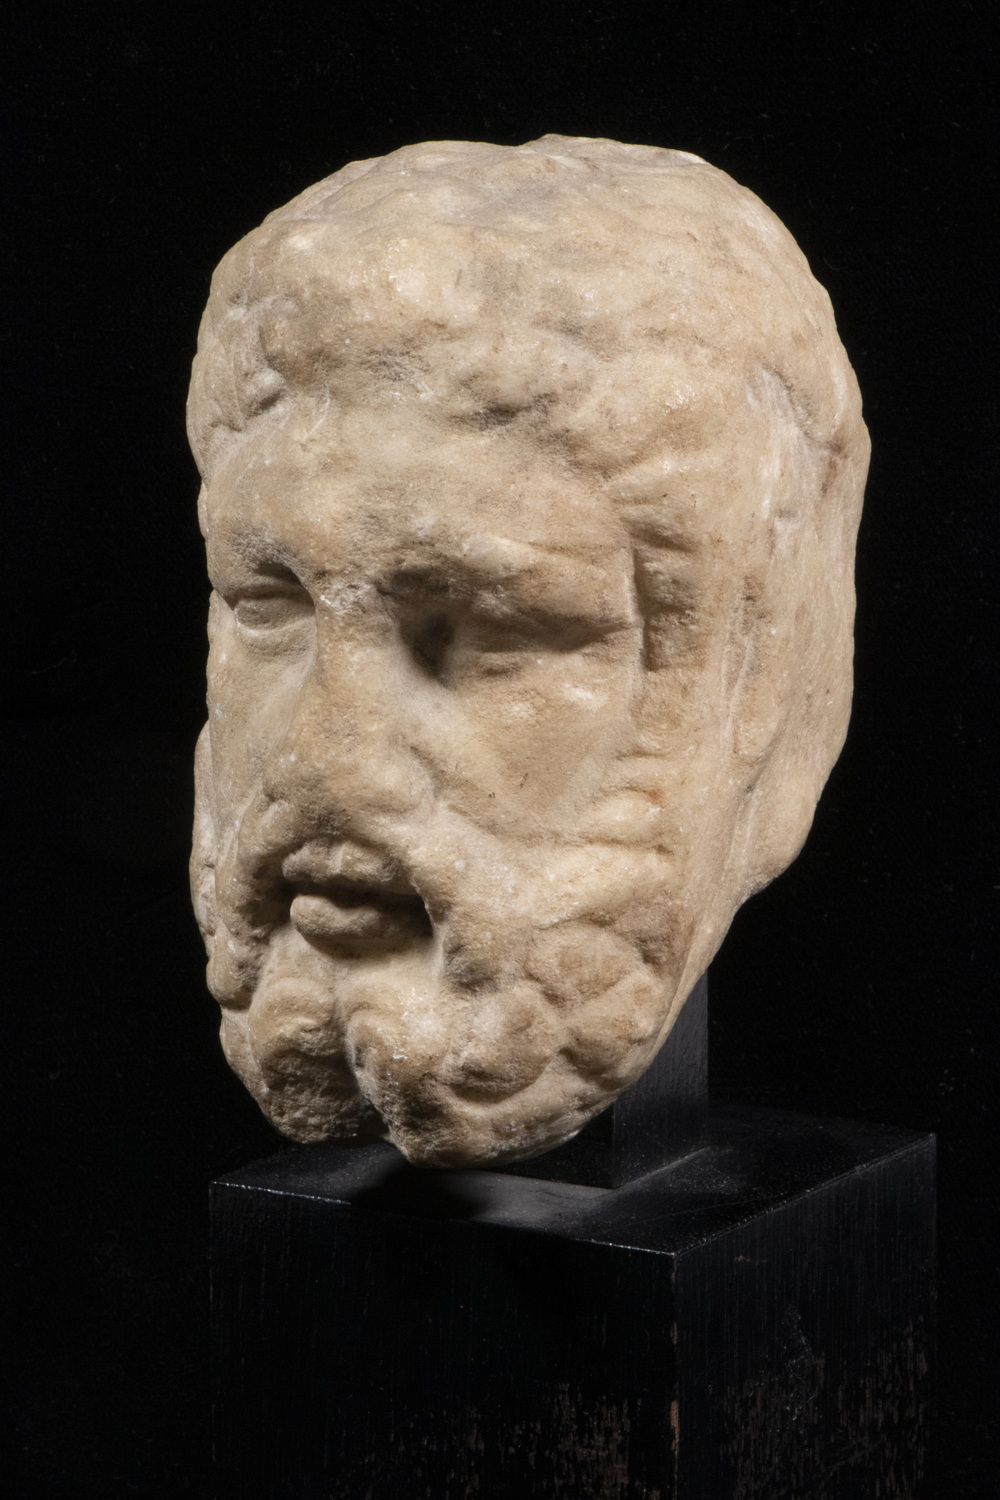 3RD C. B.C. GREEK SCULPTURE Carved